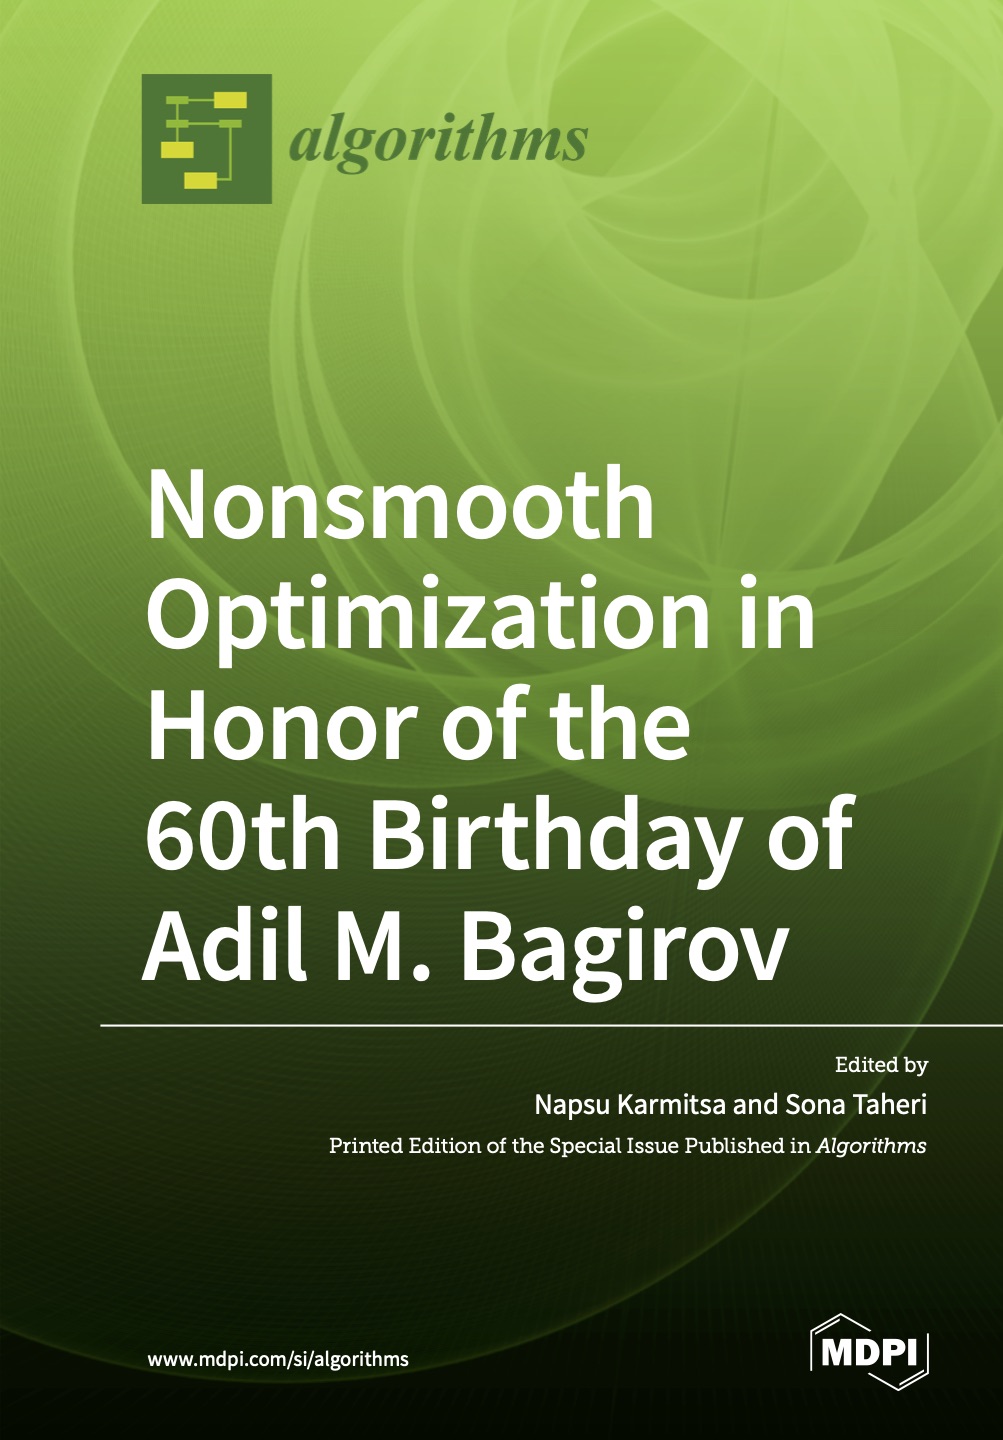 My book: Nonsmooth Optimization in honor of Adil M. Bagirov